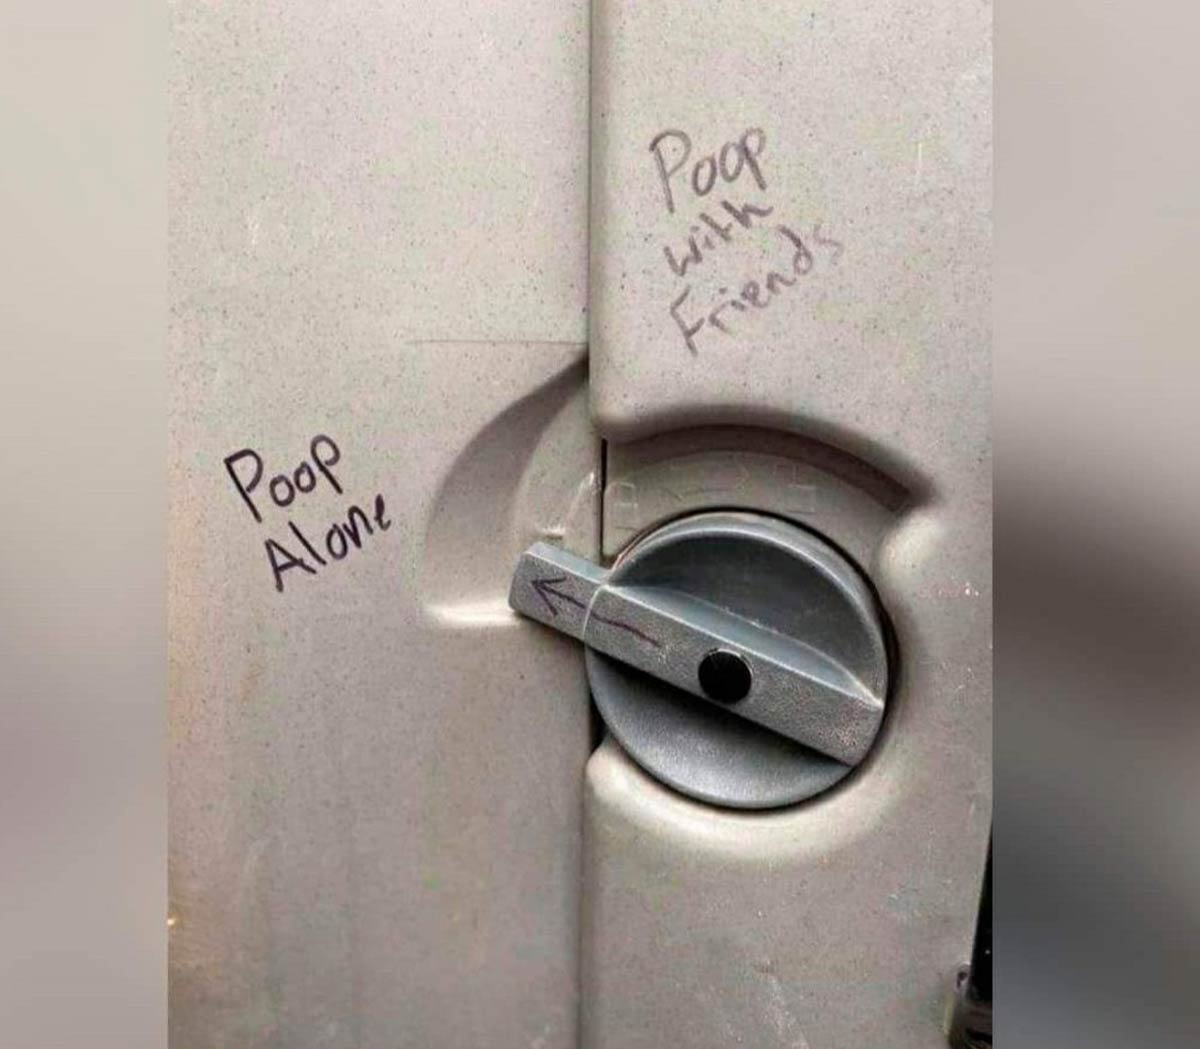 This stall lock